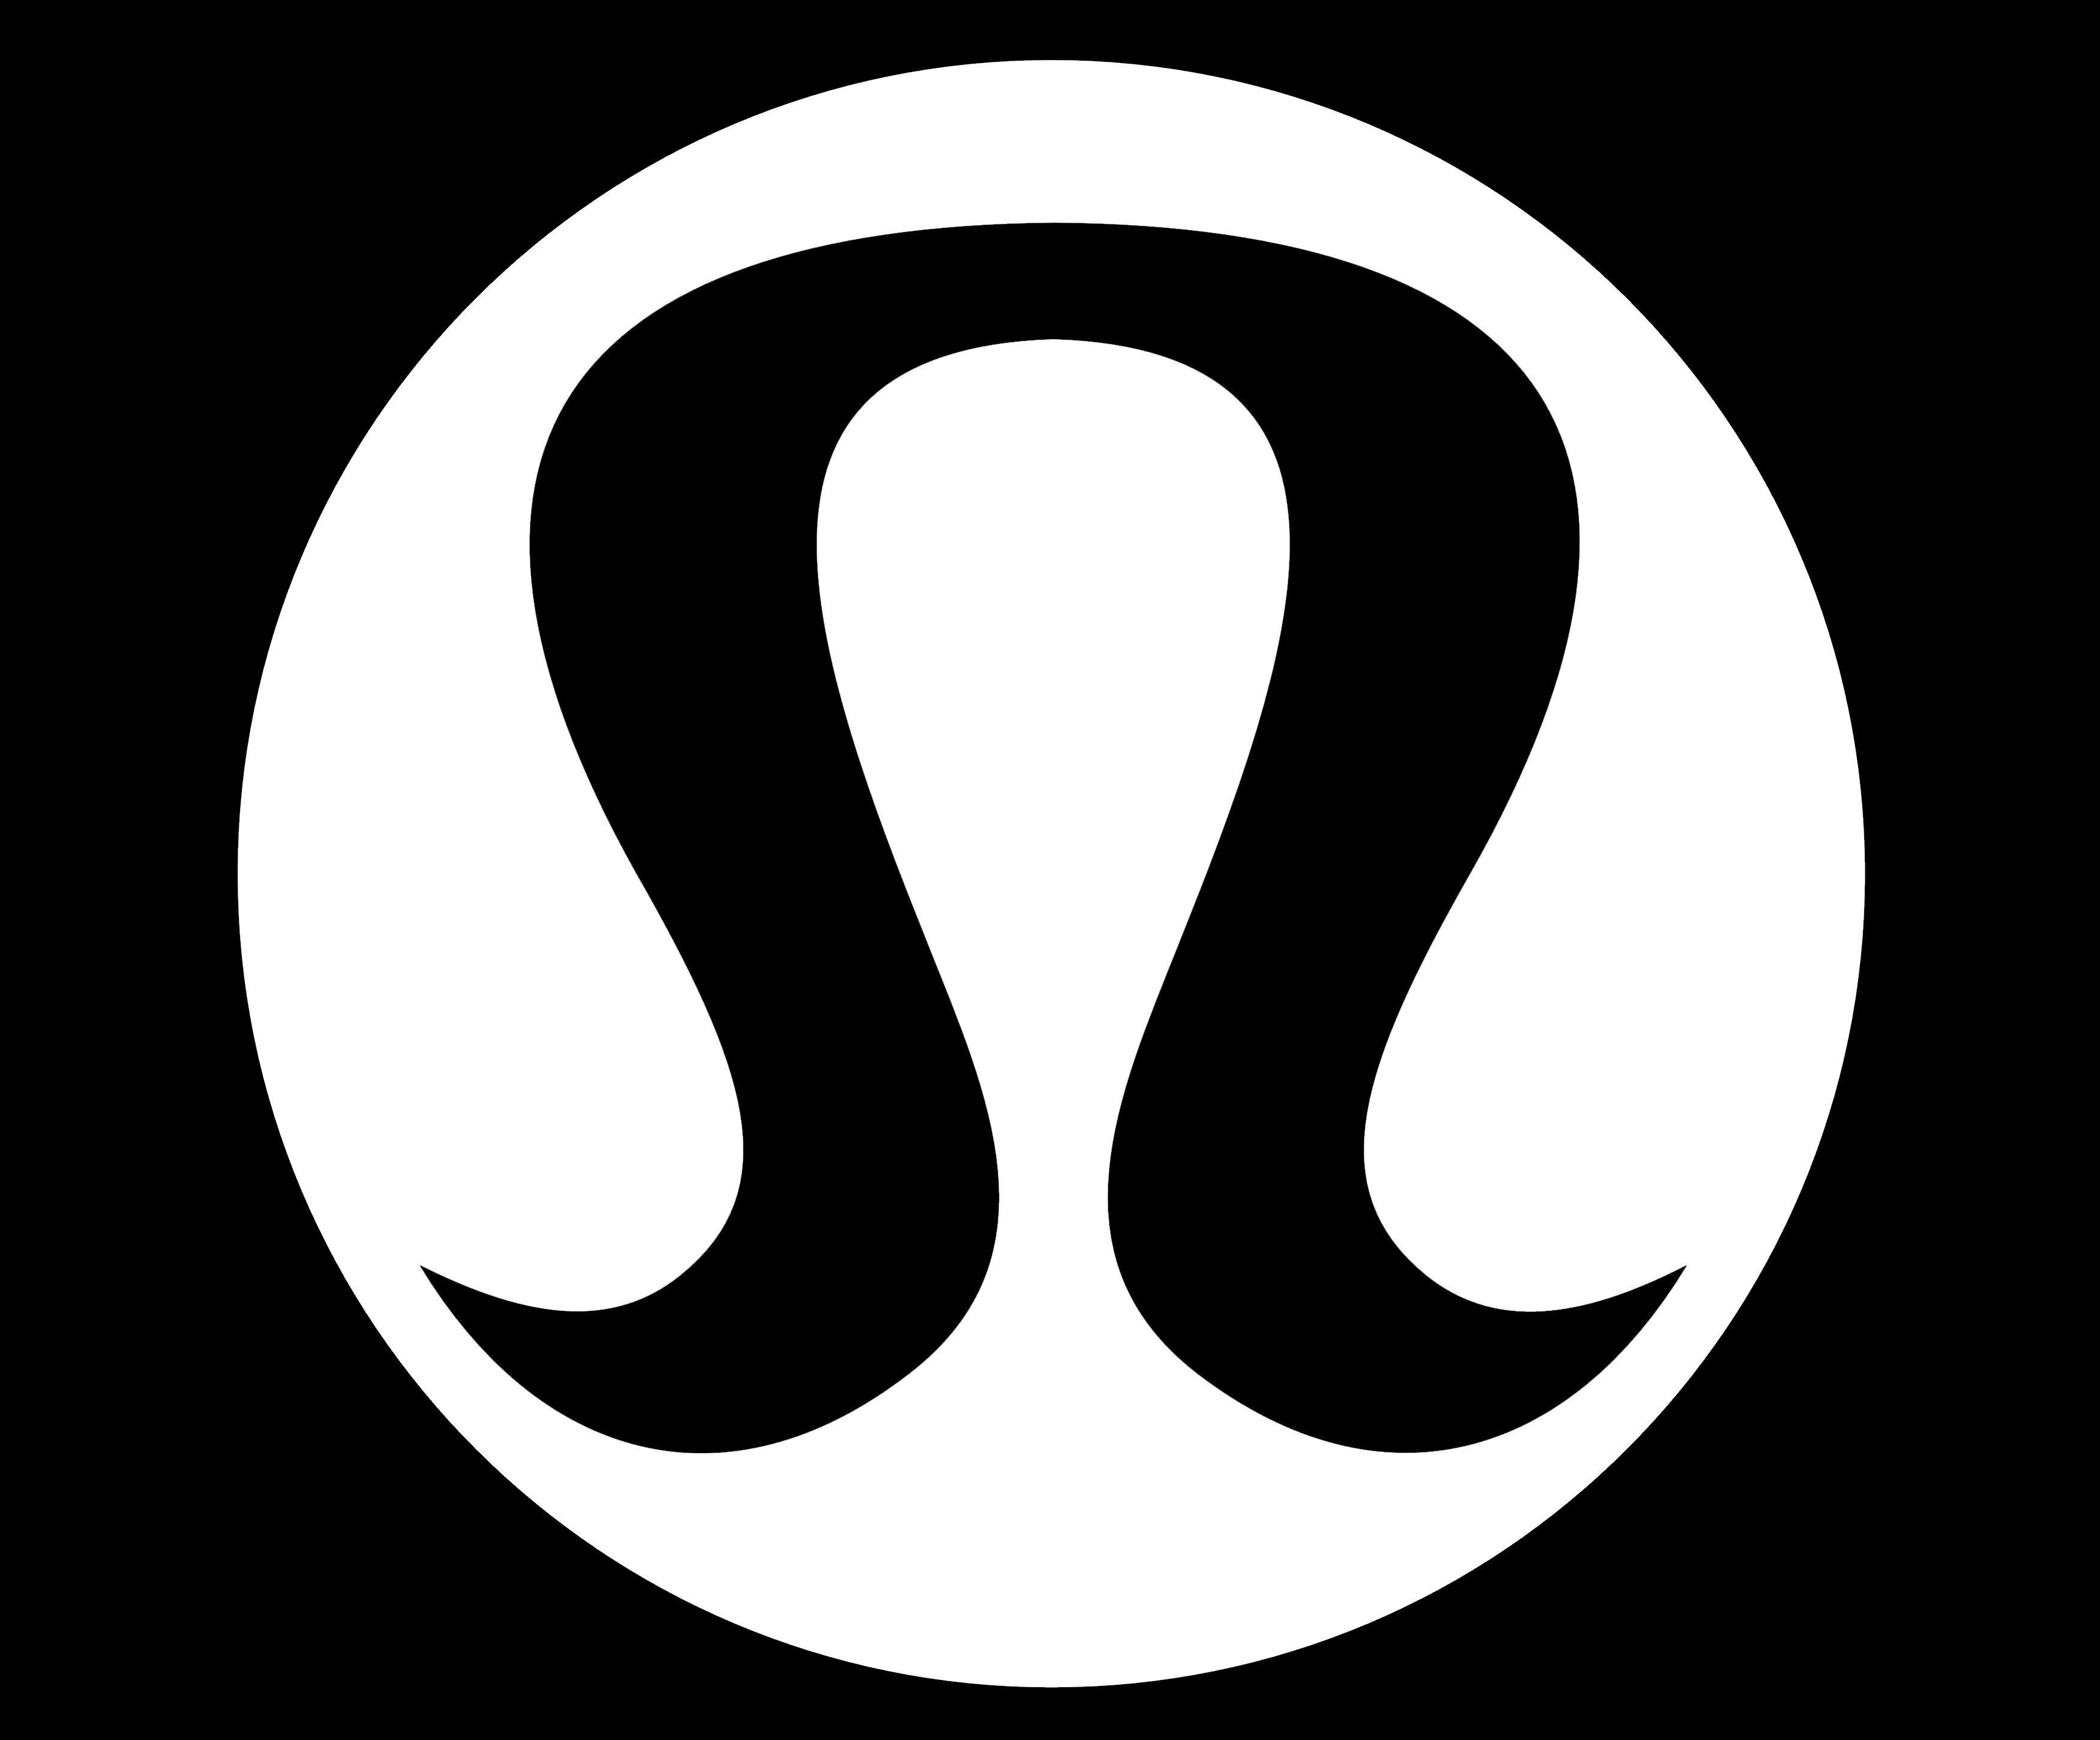 Greek Red Circle Logo - Lululemon Logo, symbol, meaning, History and Evolution